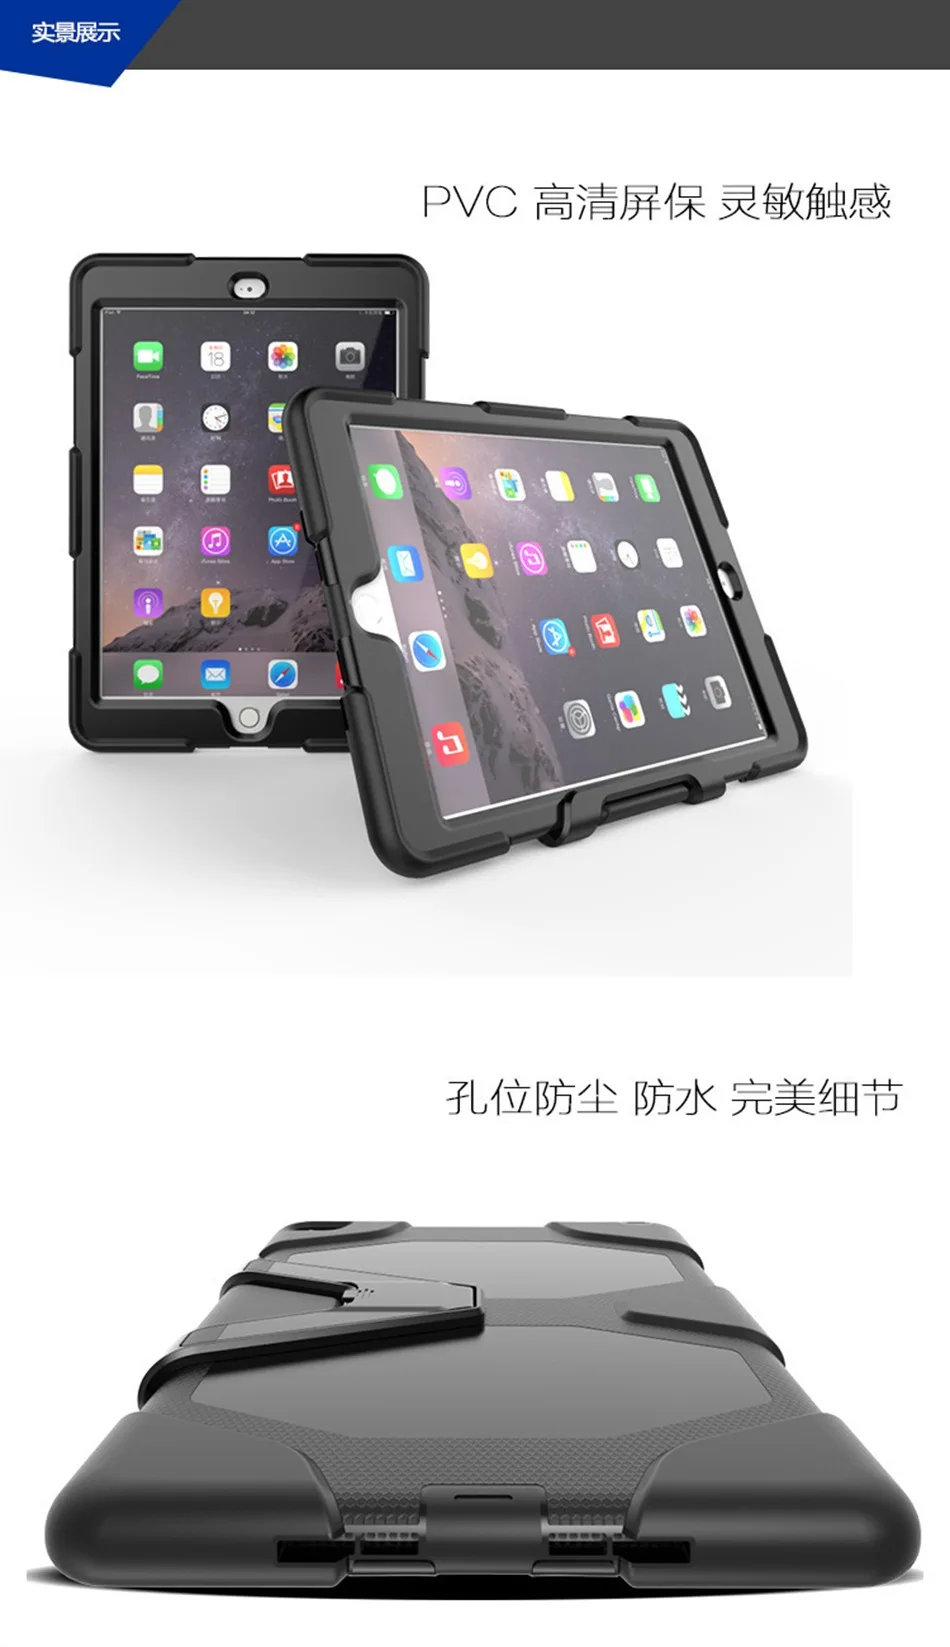 Сверхпрочный чехол Axbety для iPad Air, чехол, полная защита, подставка, Гибридный чехол для iPad 5 Air 1st, противоударный защитный чехол для планшета s